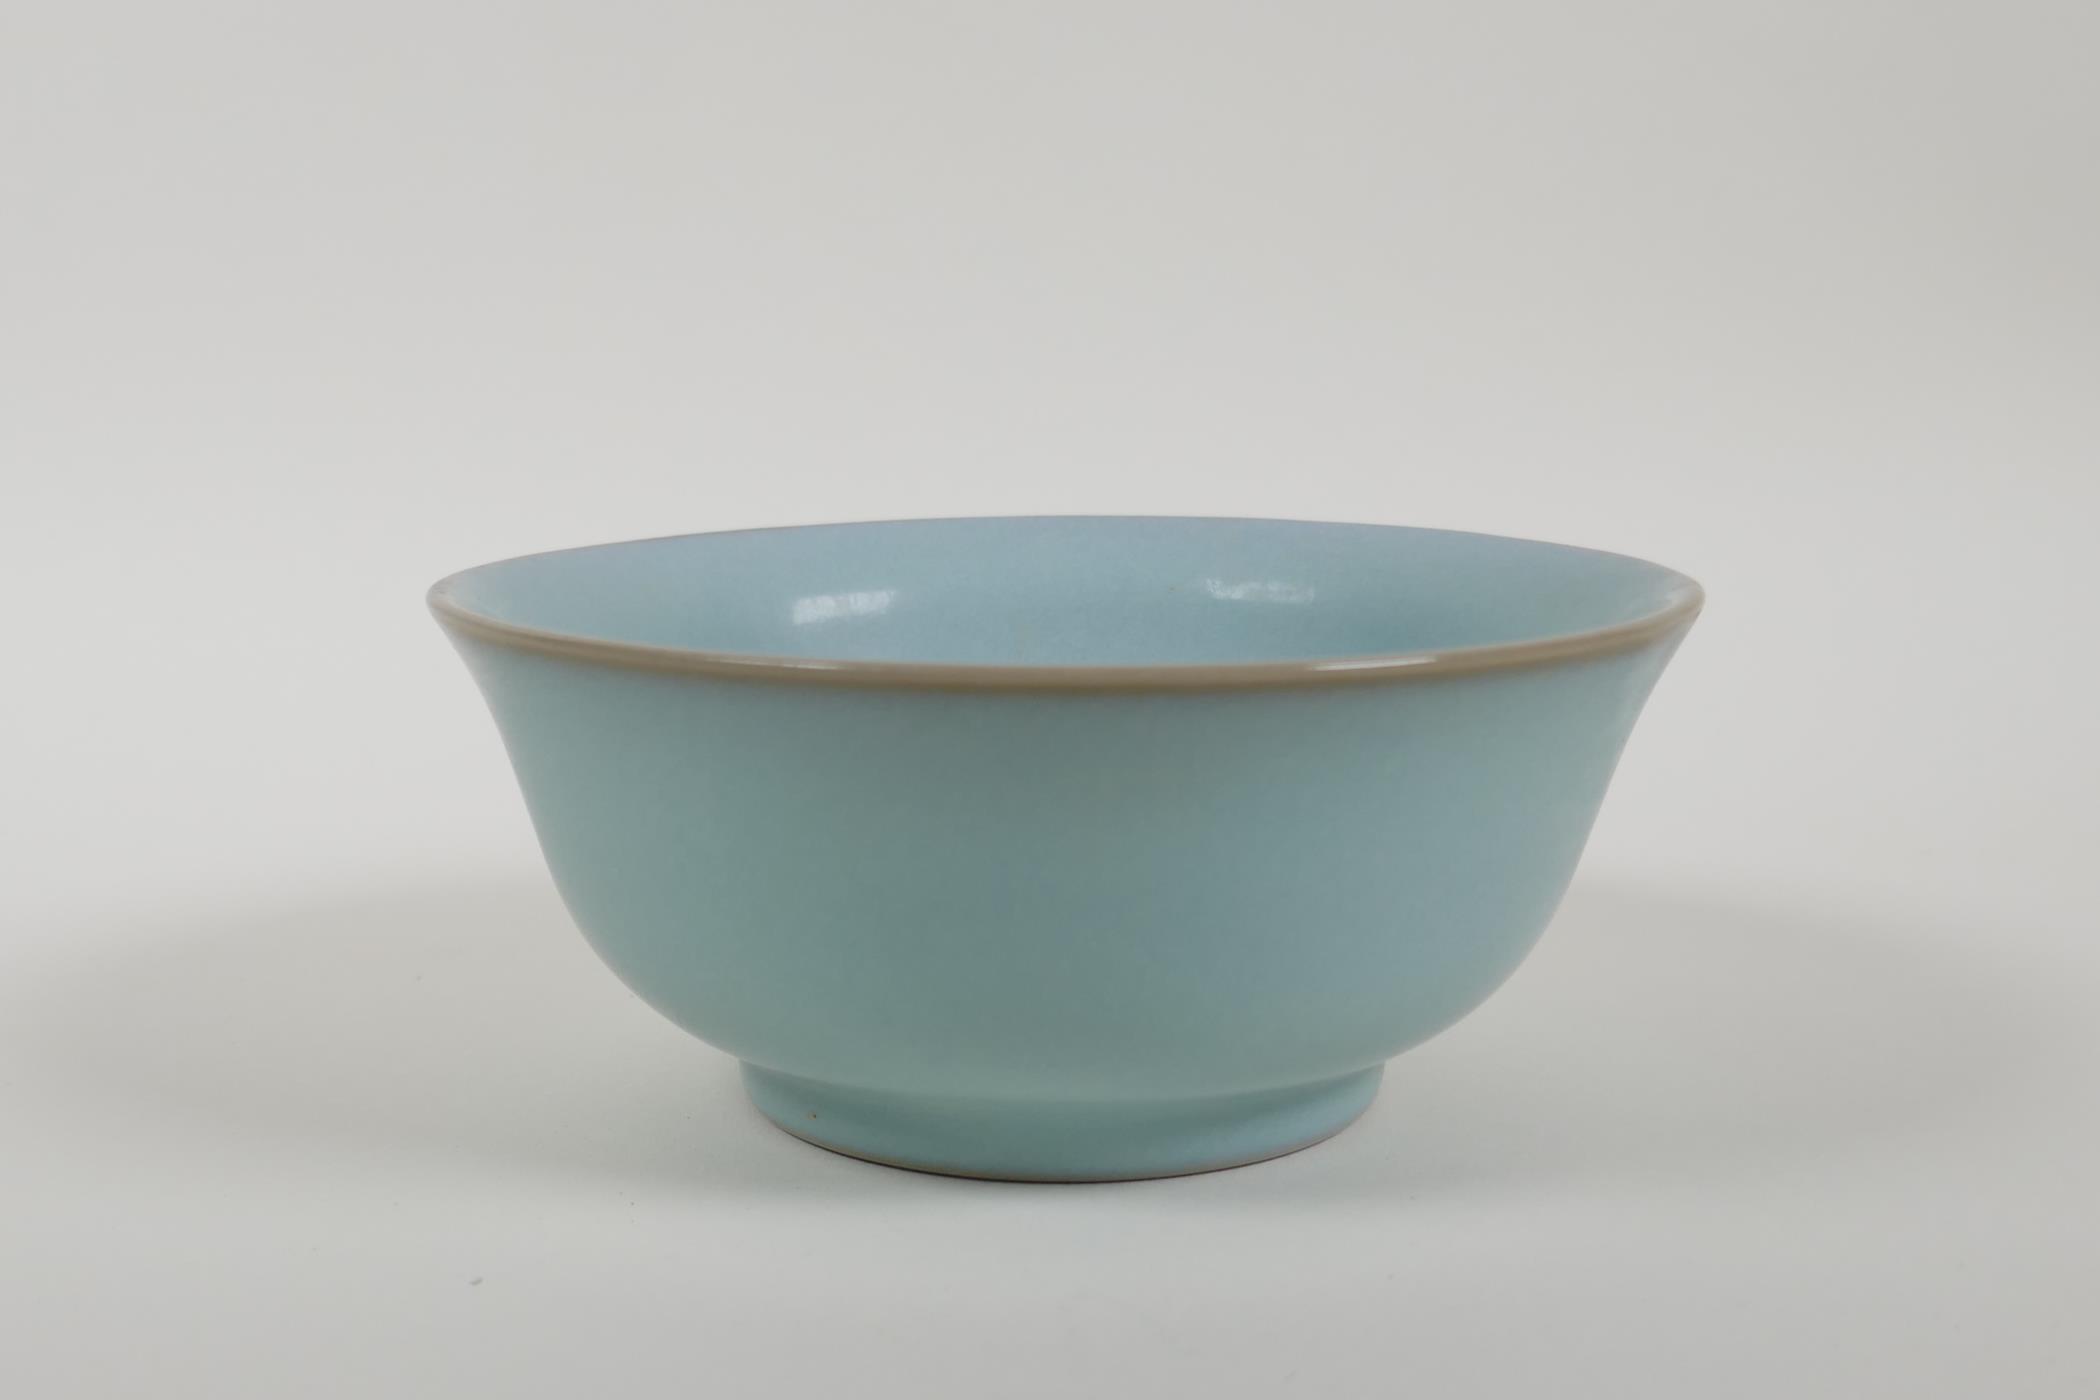 A Chinese celadon Ru ware style porcelain rice bowl, 5½" diameter